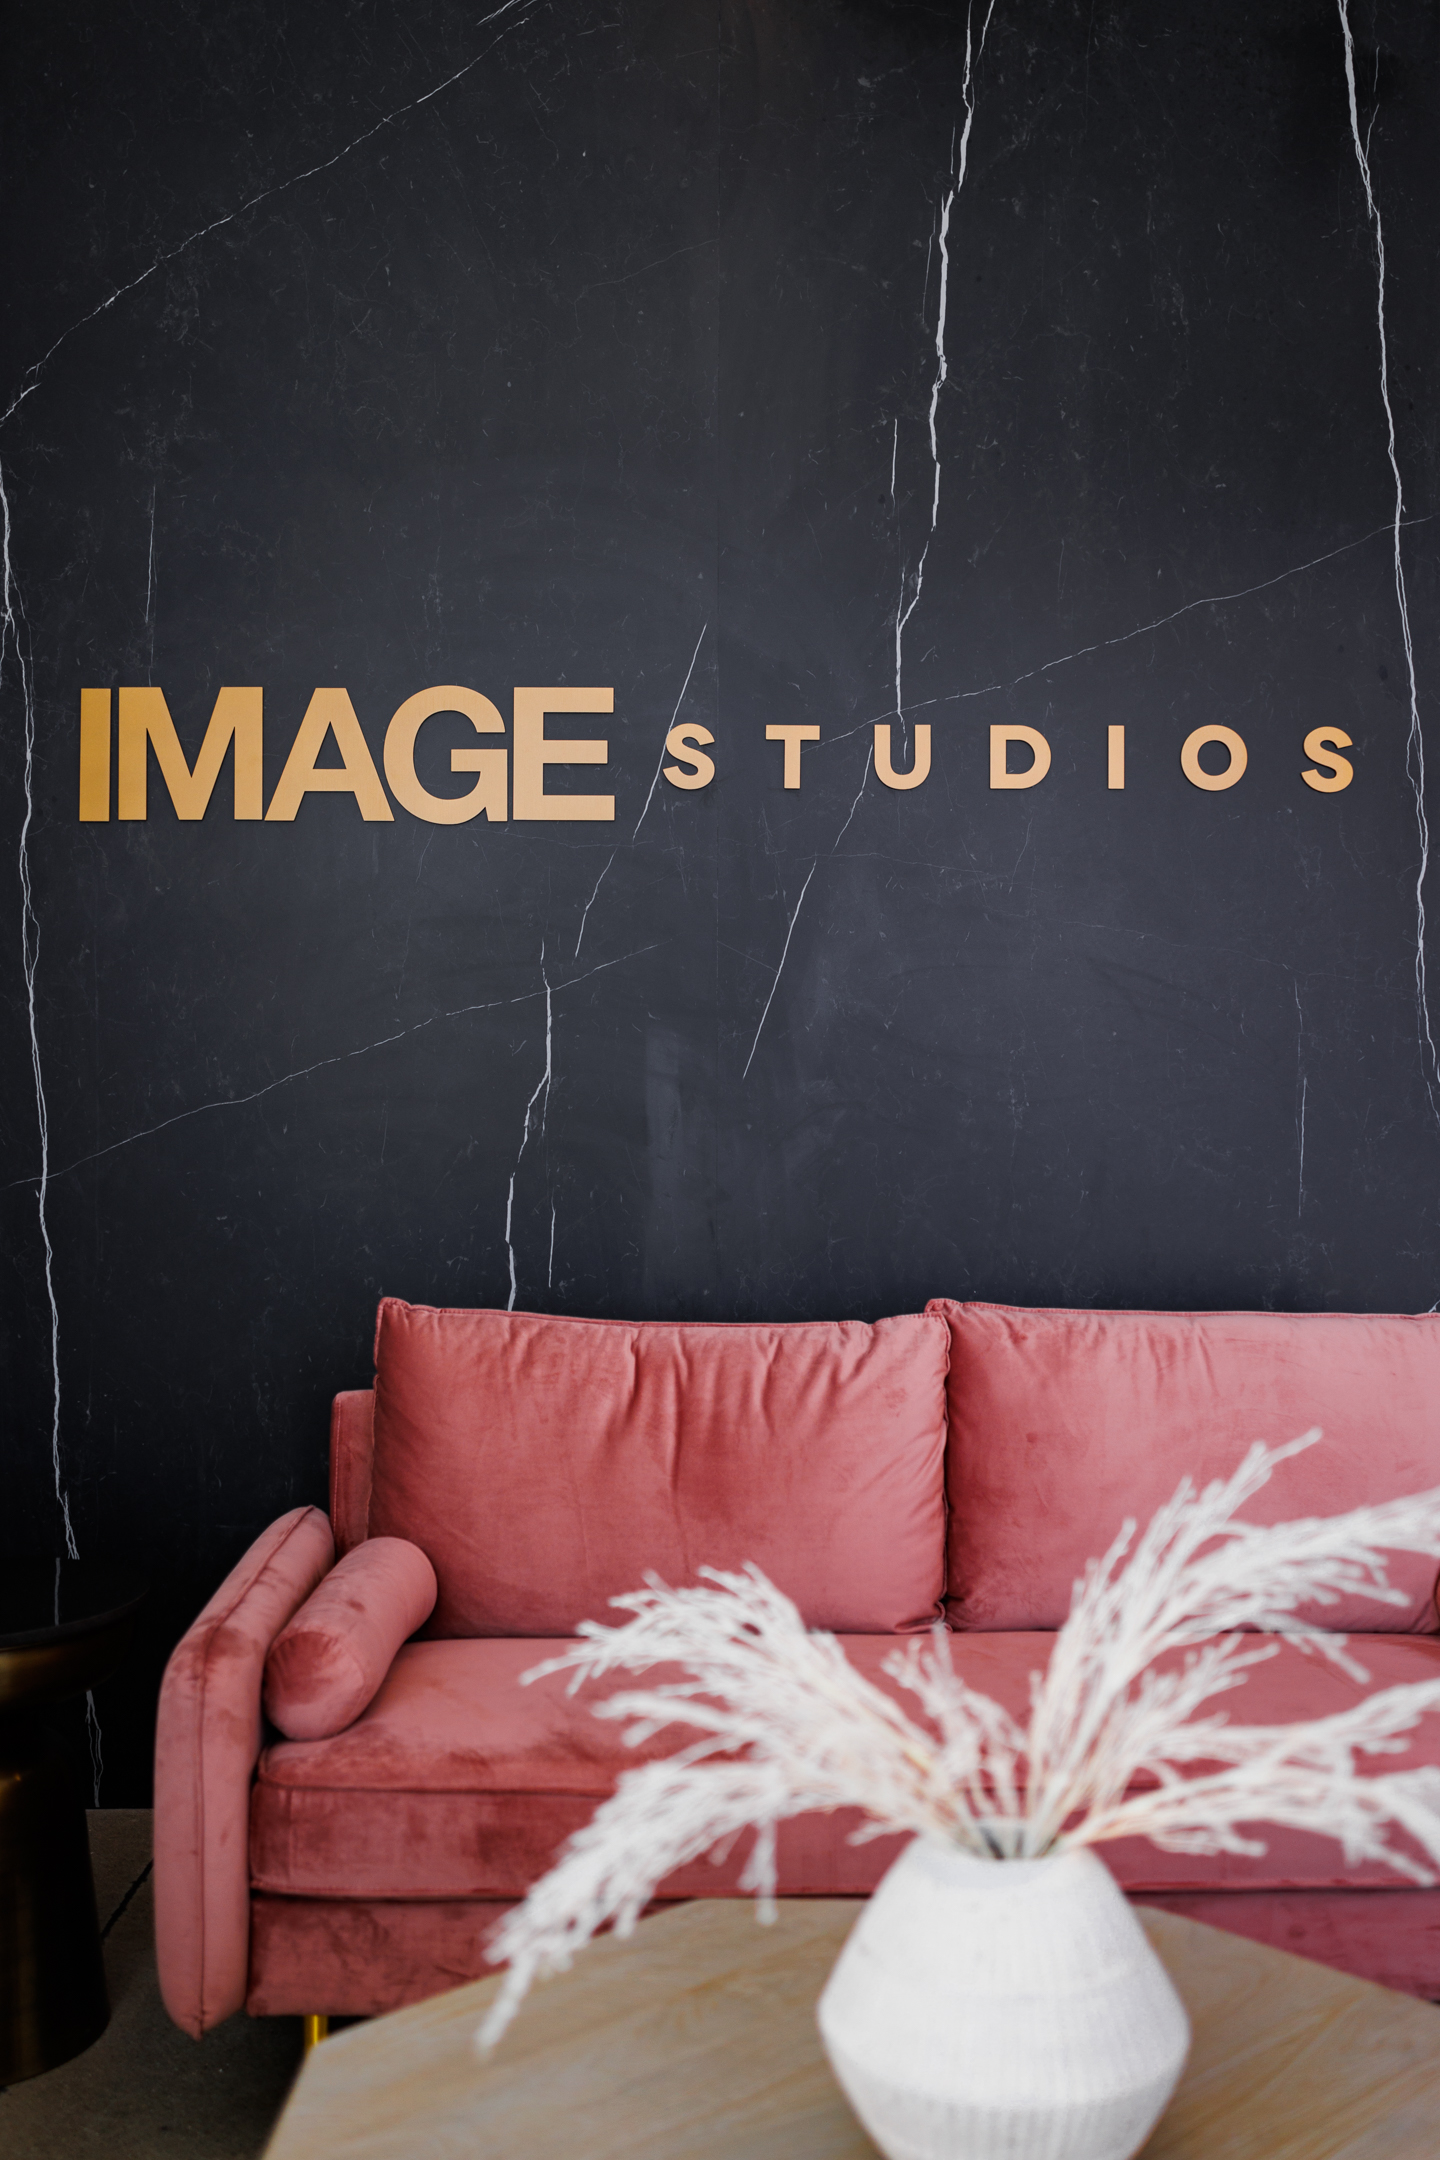 IMAGE Studios Now Open in Dallas Galleria, TX